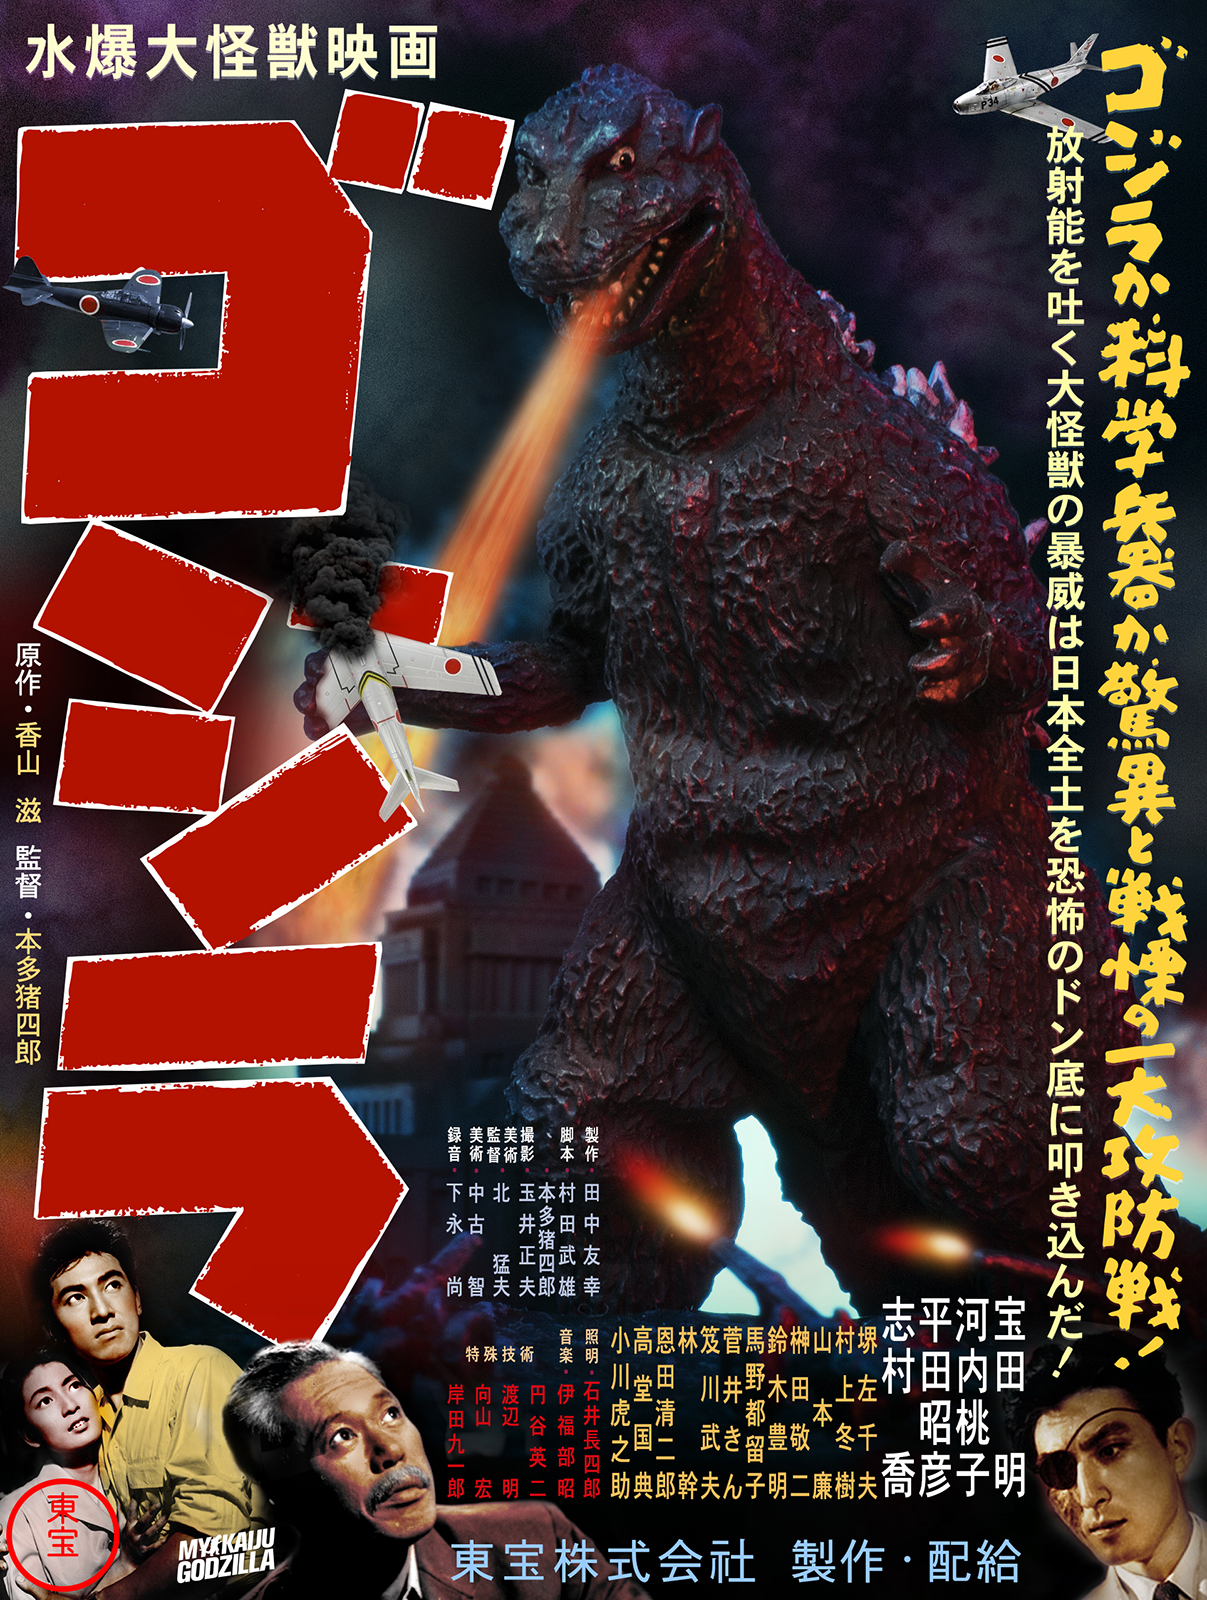 Godzilla 1954 Recreated Theatrical Poster